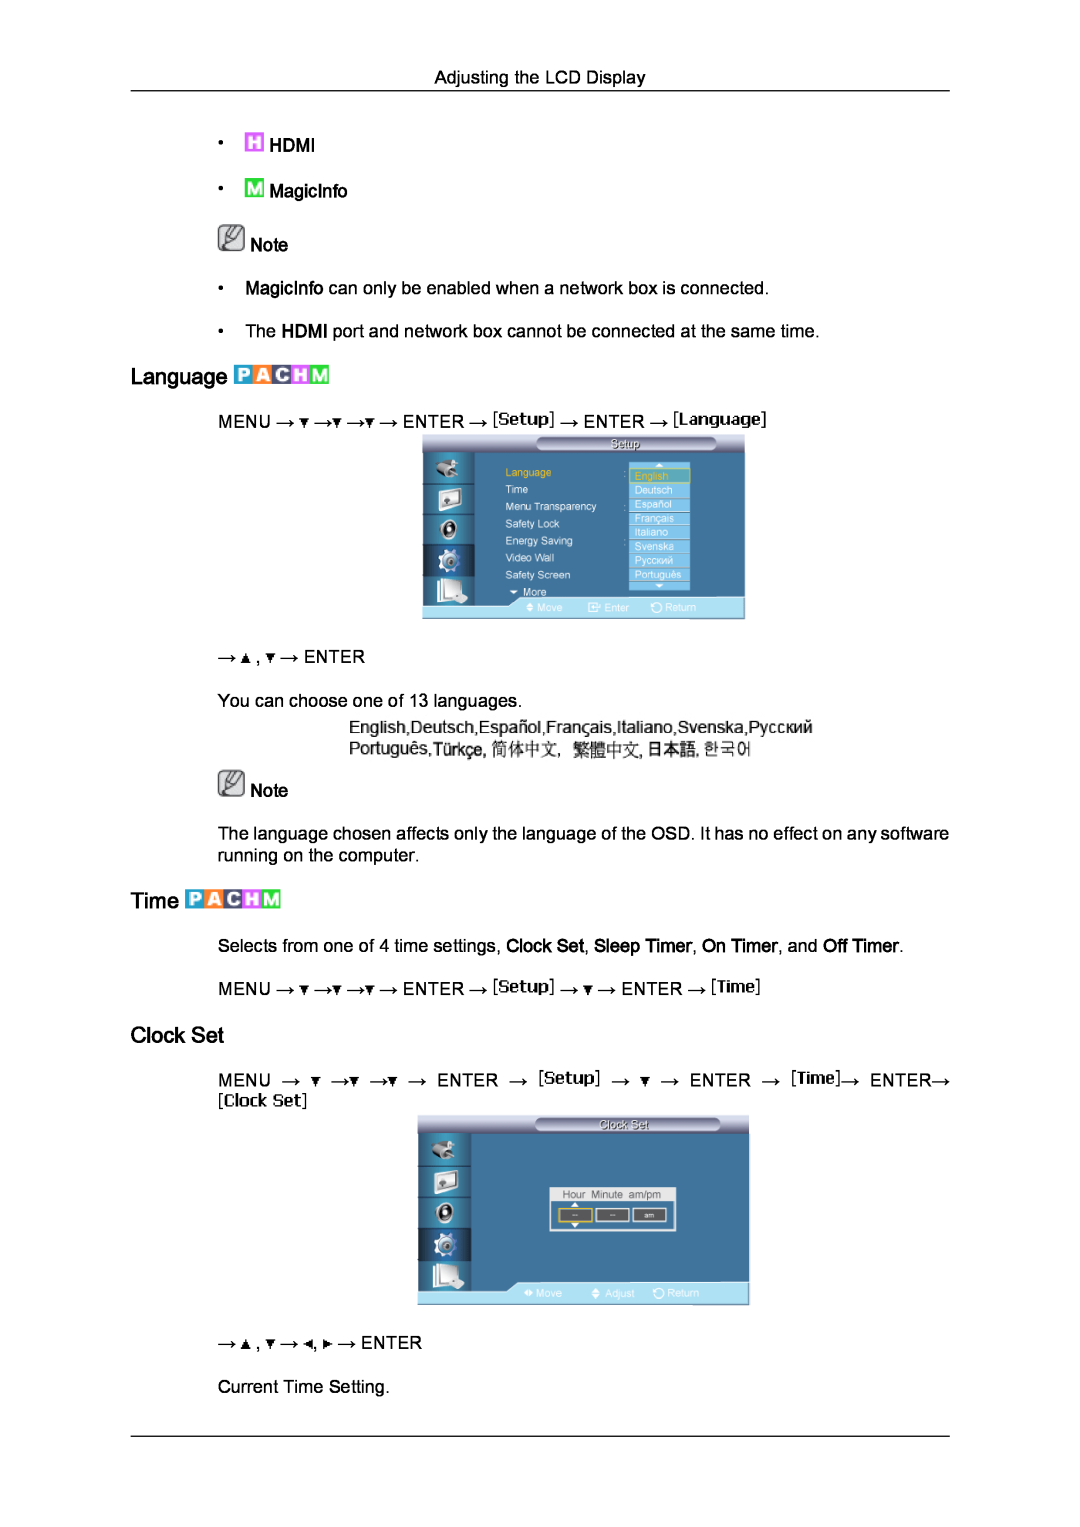 Samsung 650FP-2, 650MP-2 user manual Language, Time, Clock Set, HDMI MagicInfo 